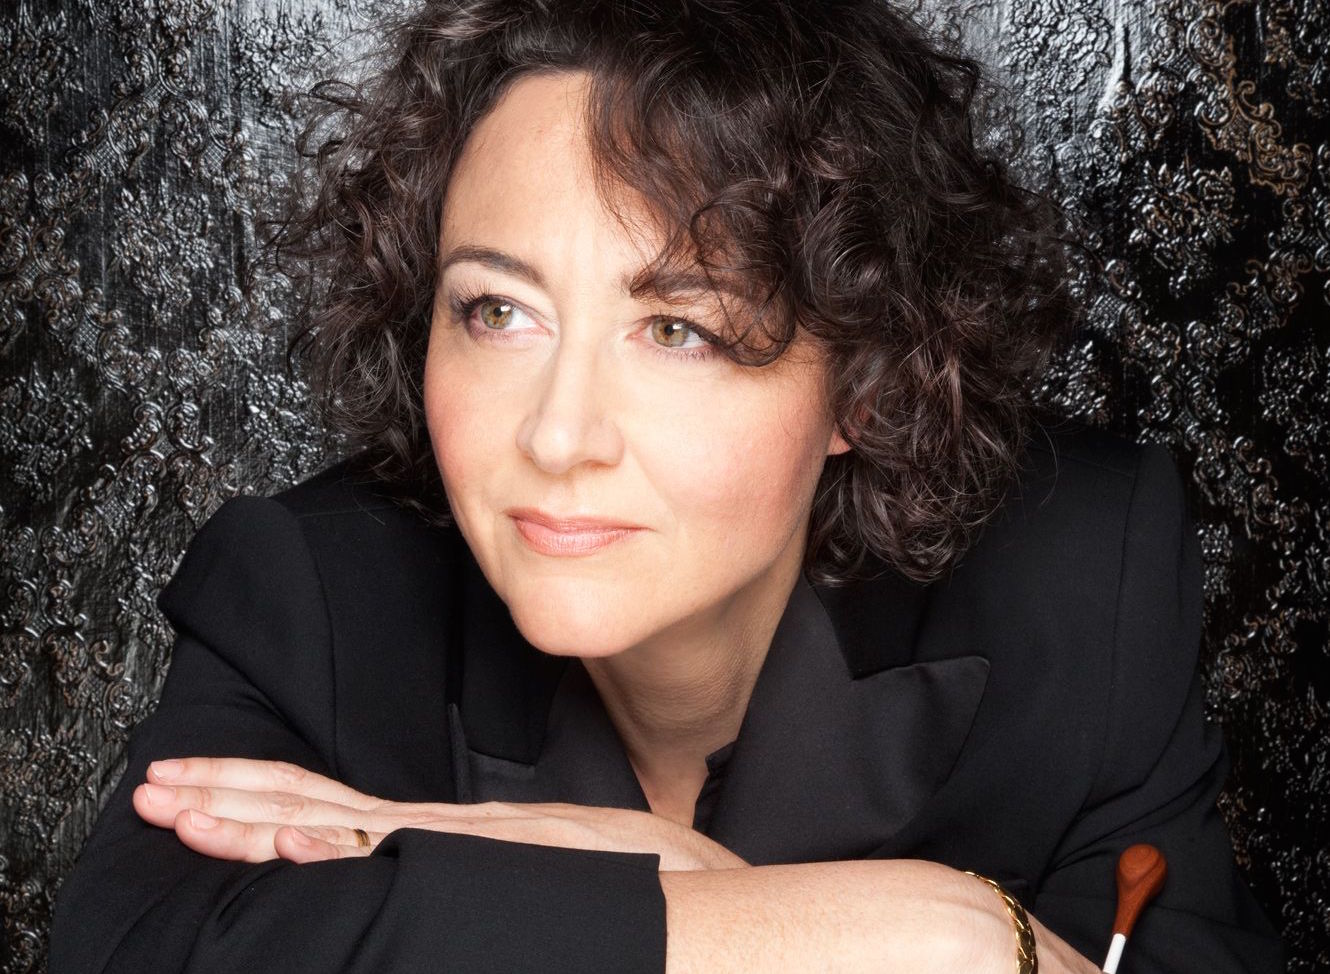 RTÉ Appoints Nathalie Stutzmann as Principal Guest Conductor of RTÉ National Symphony Orchestra